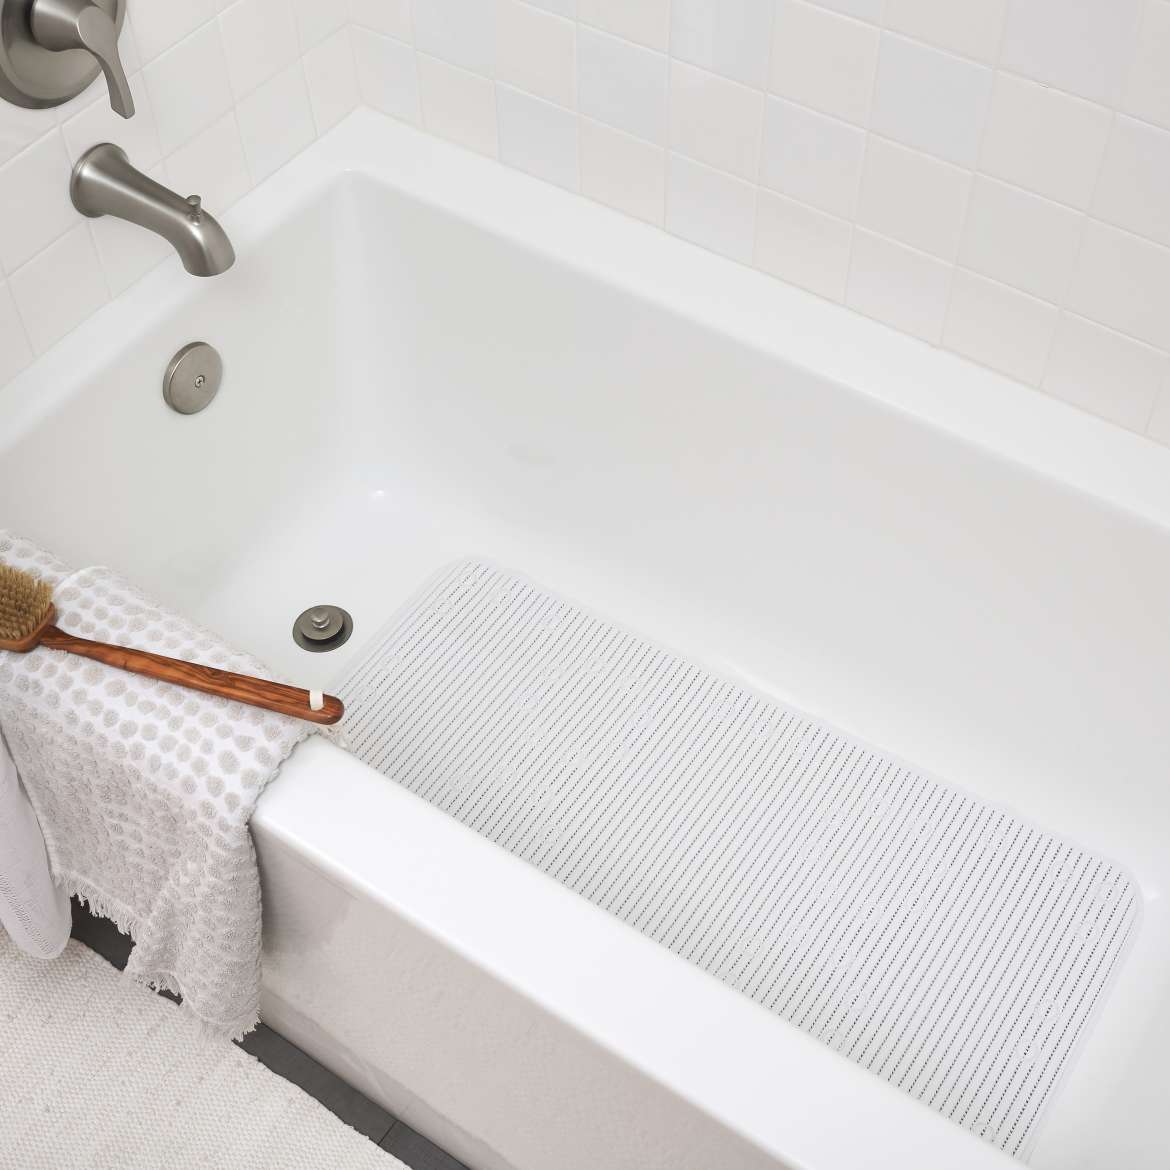 Clorox™ Cushioned Bath Mat